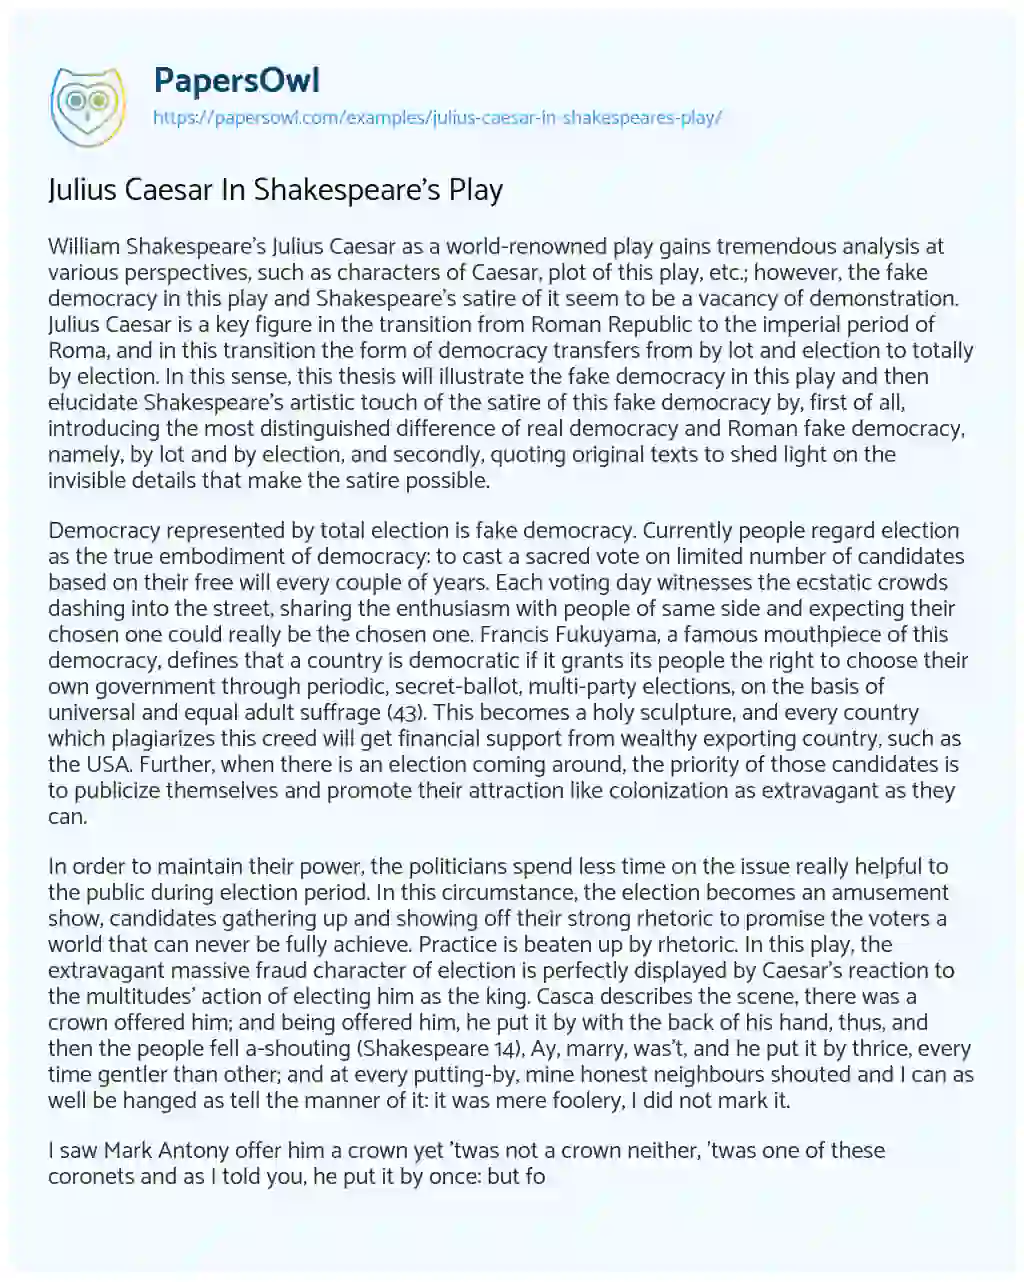 Essay on Julius Caesar in Shakespeare’s Play